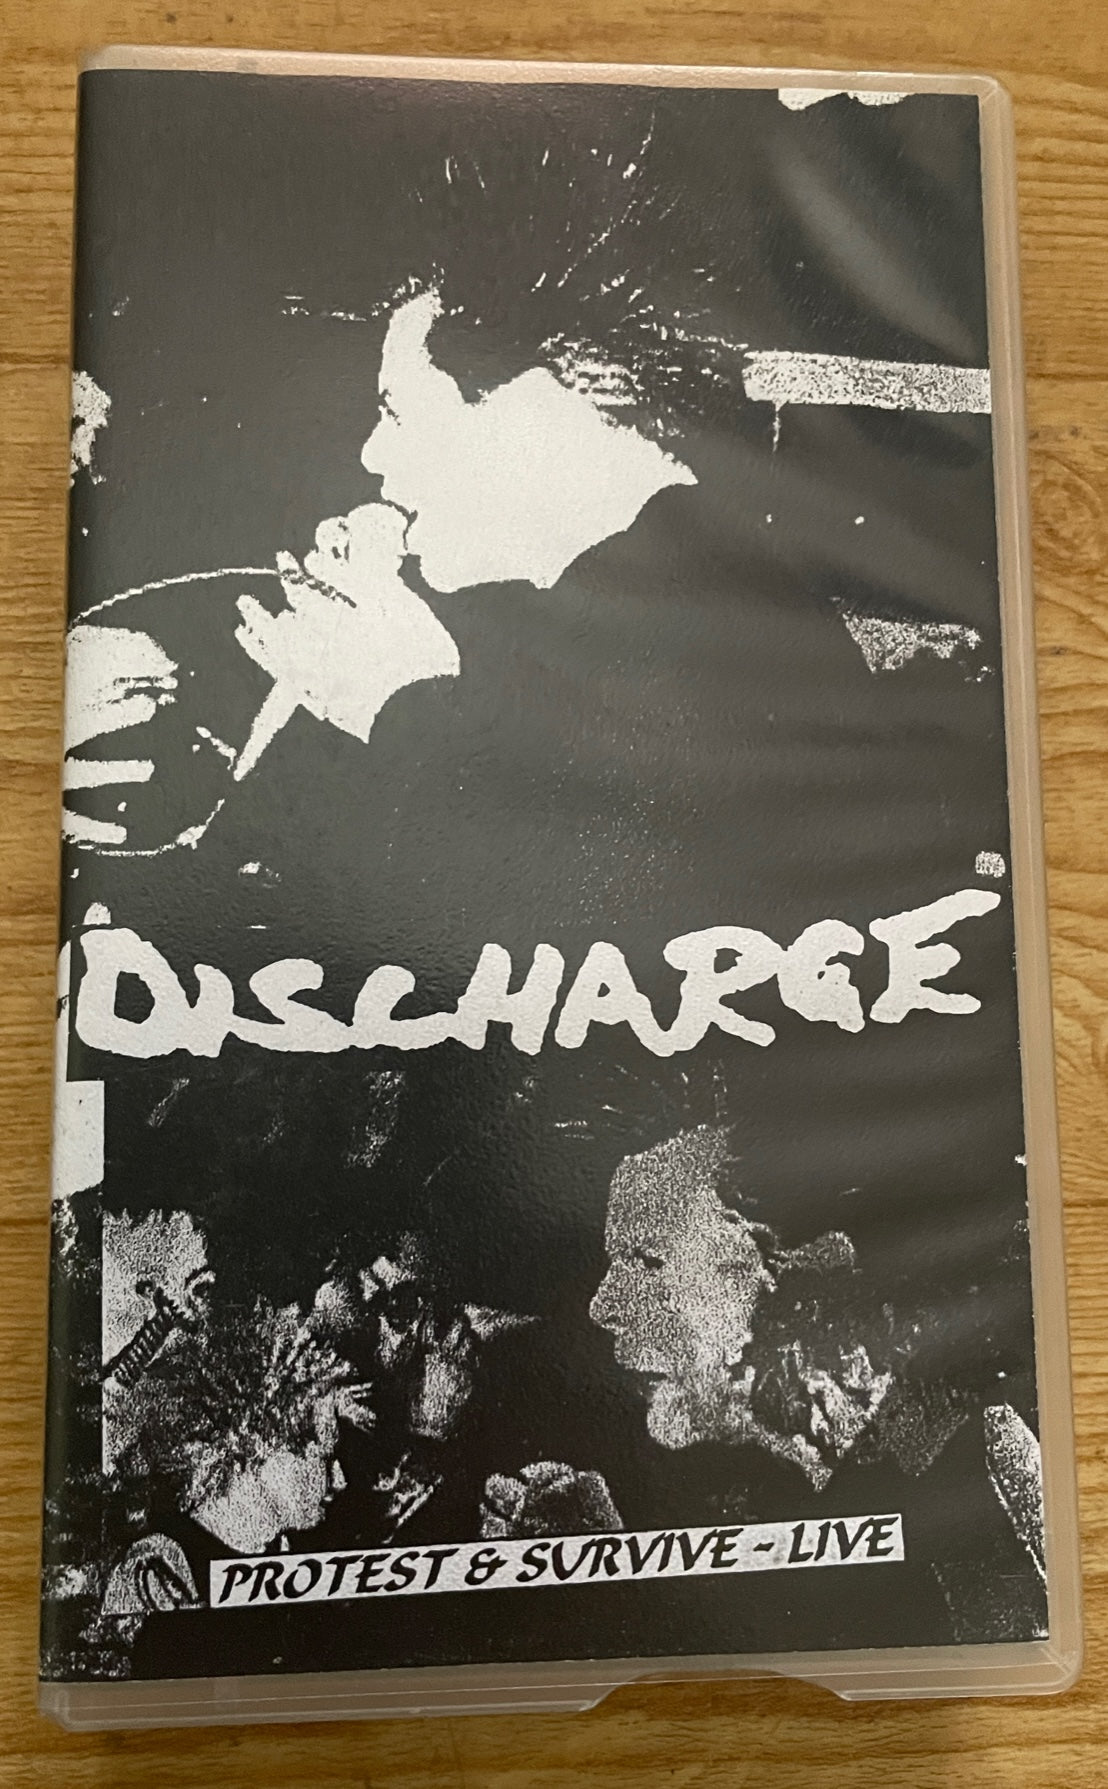 Discharge - Protest & Survive - Live (VHS)